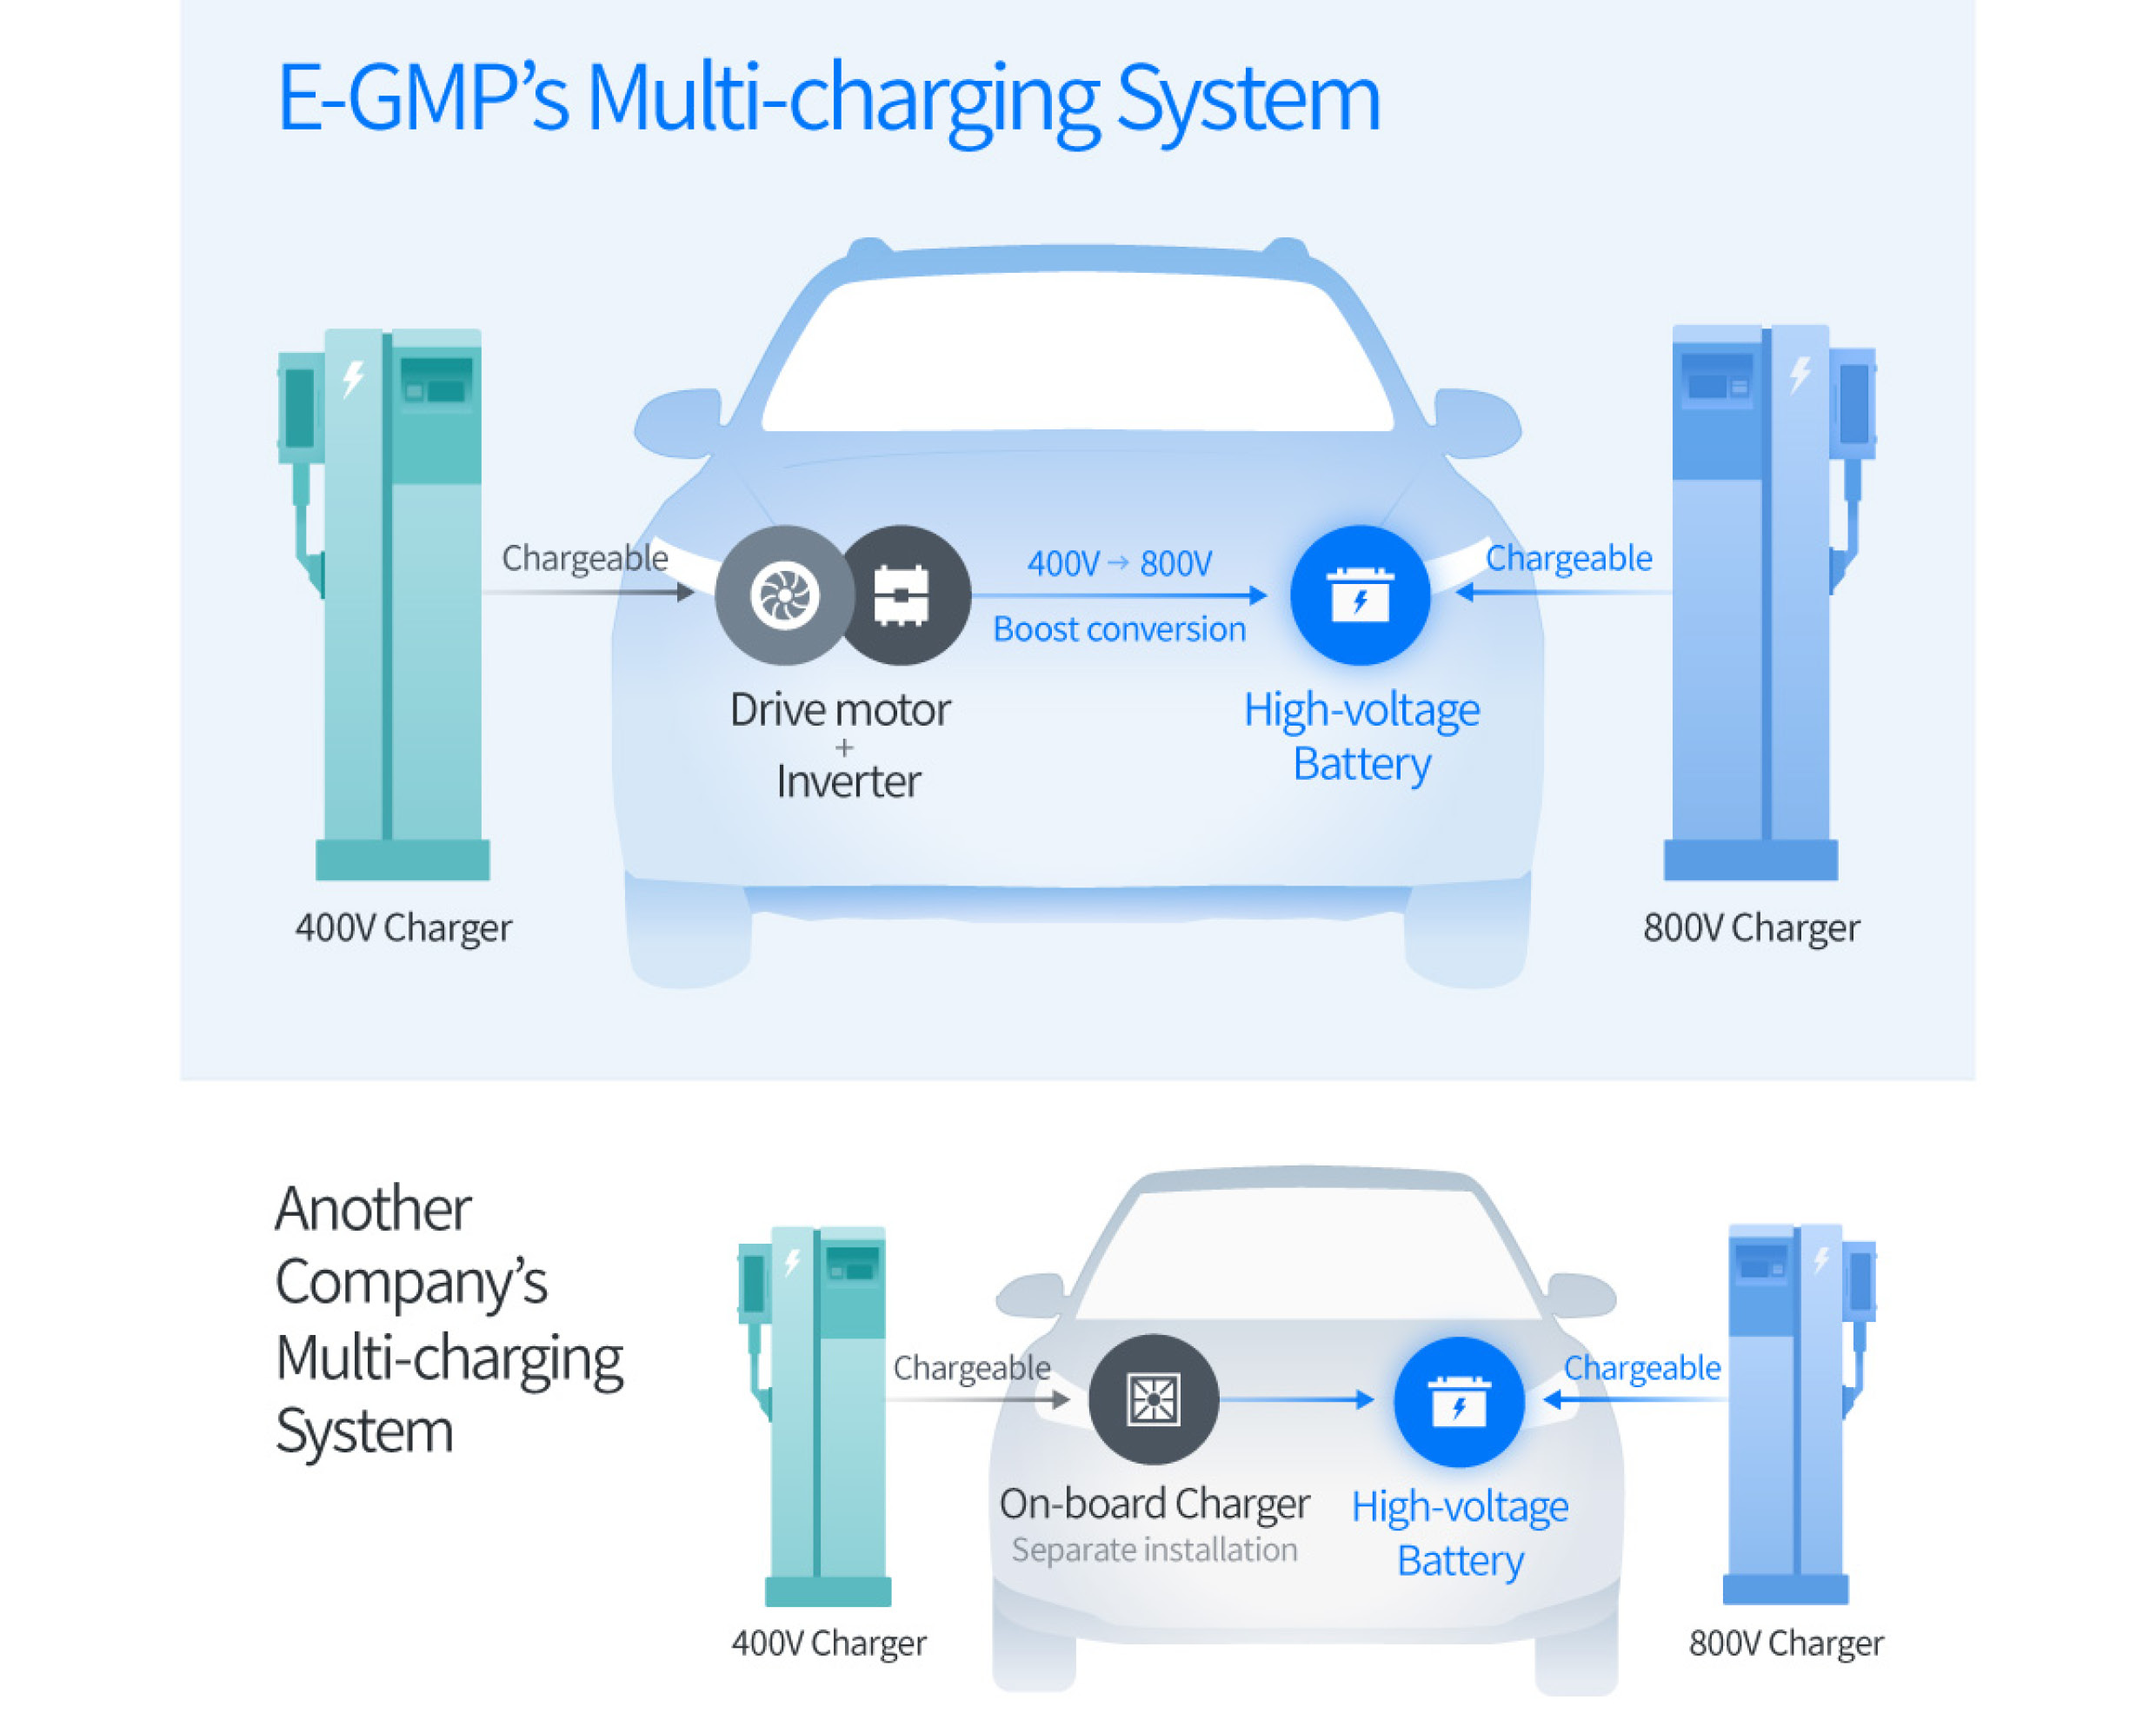 Infographic explaining E-GMP's multi-charging system